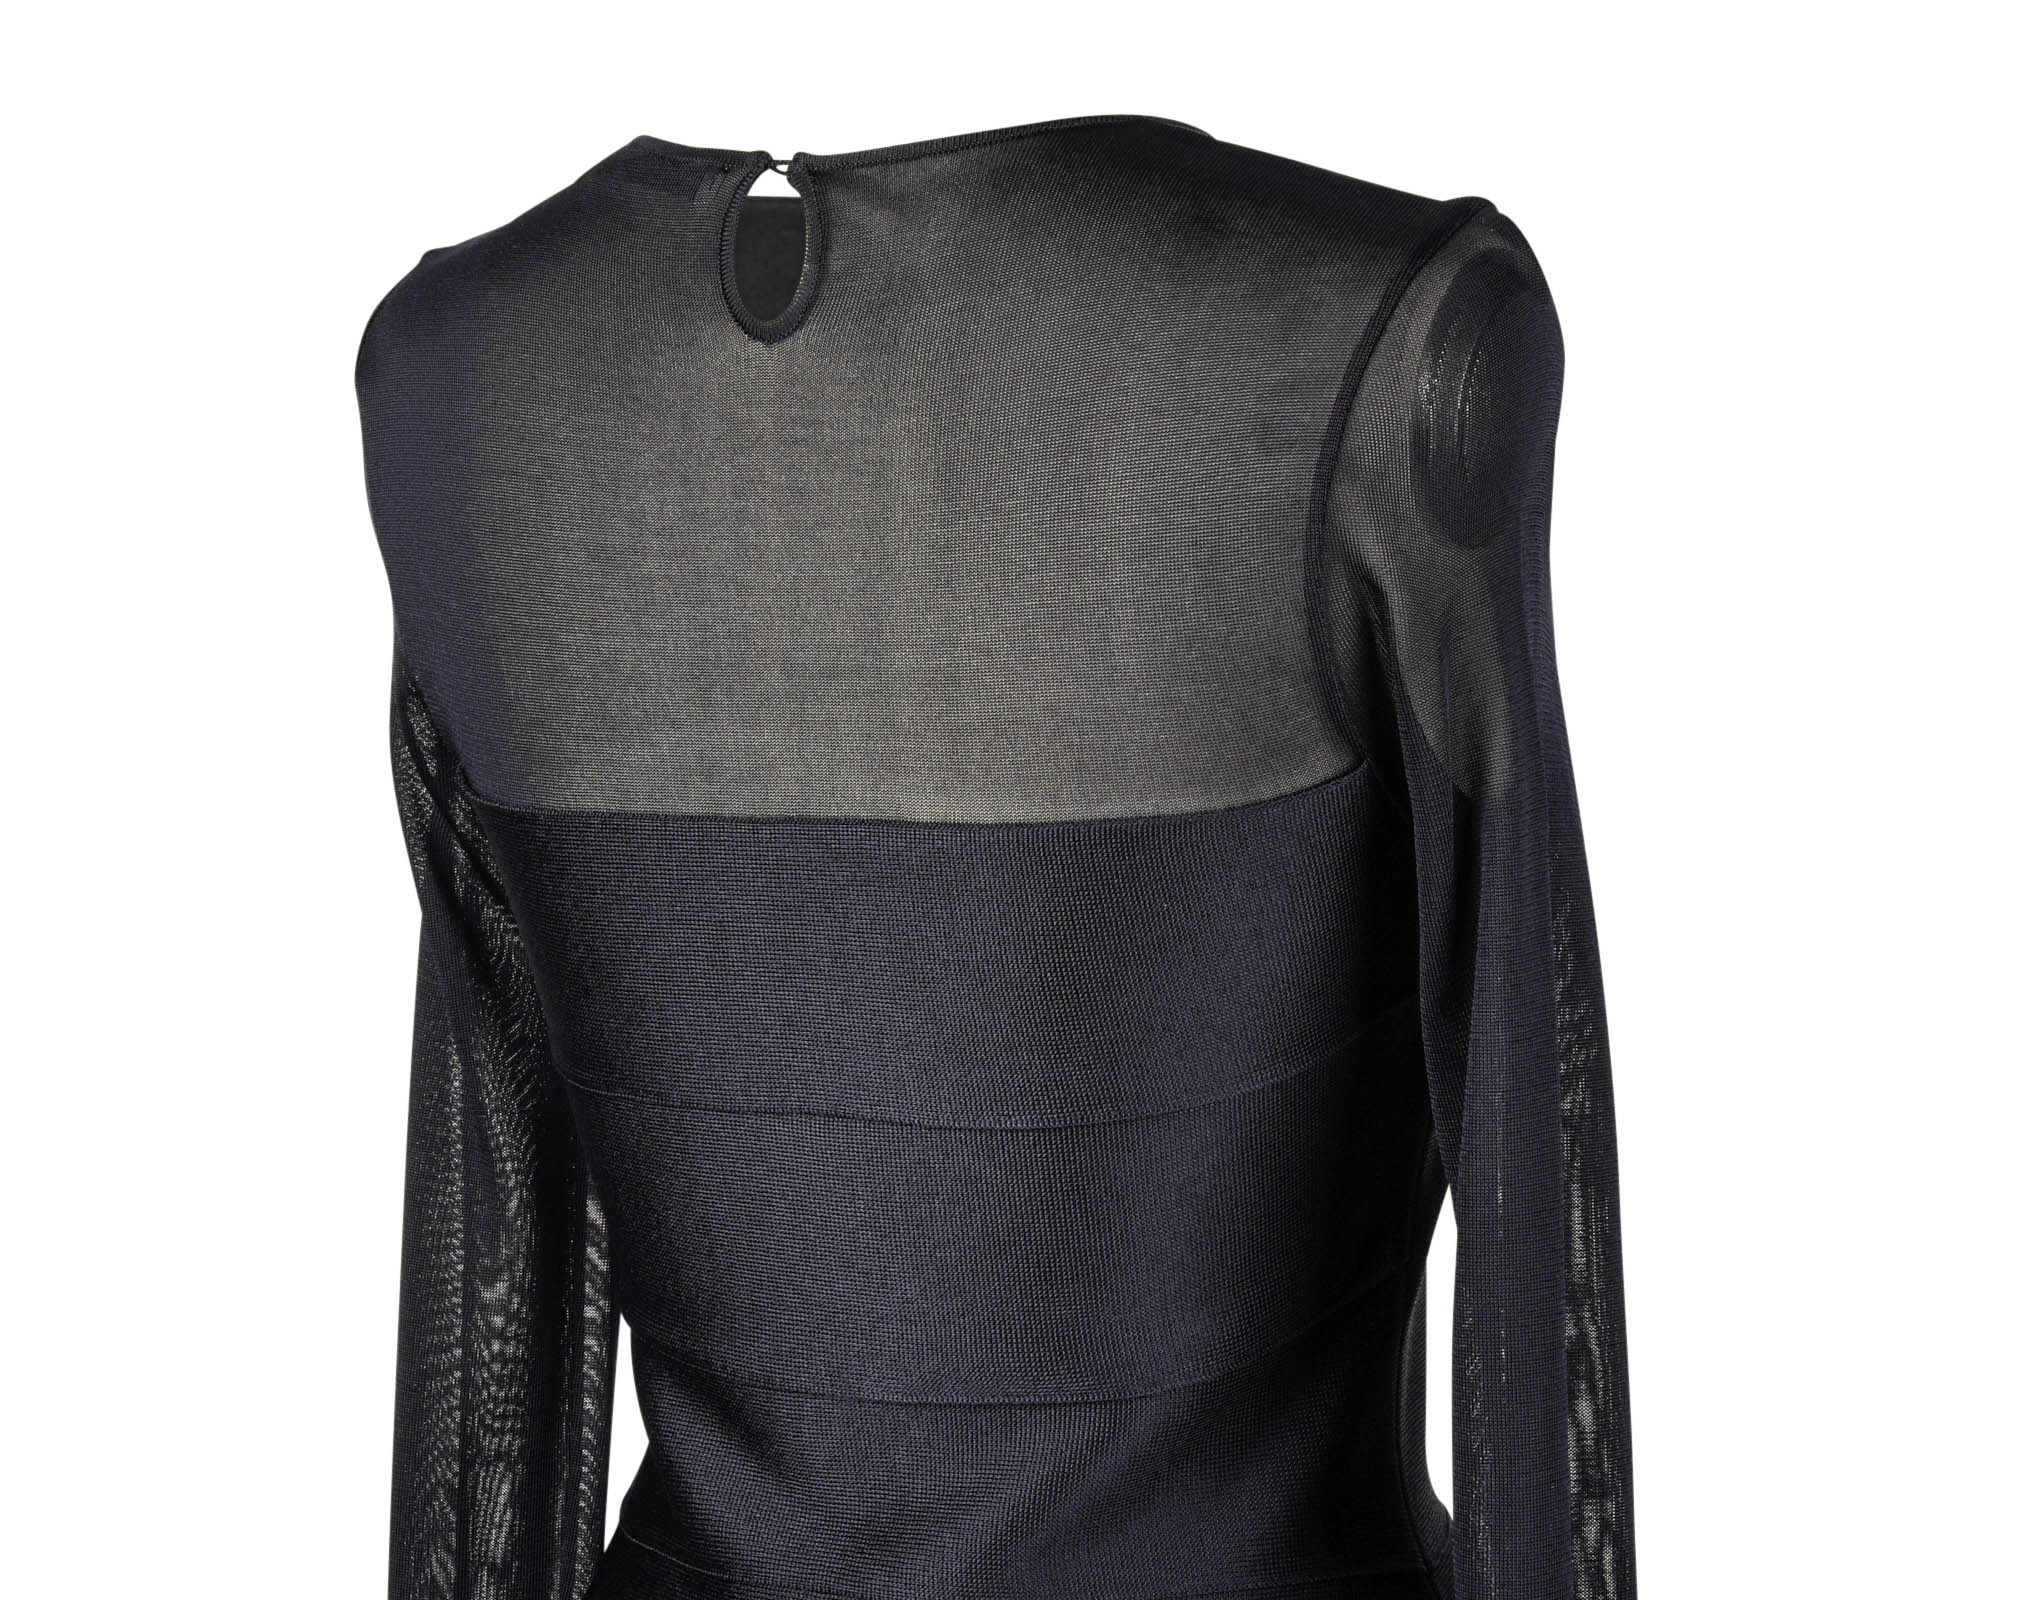 Christian Dior Dress Black Bandage and Mesh 40 / 8